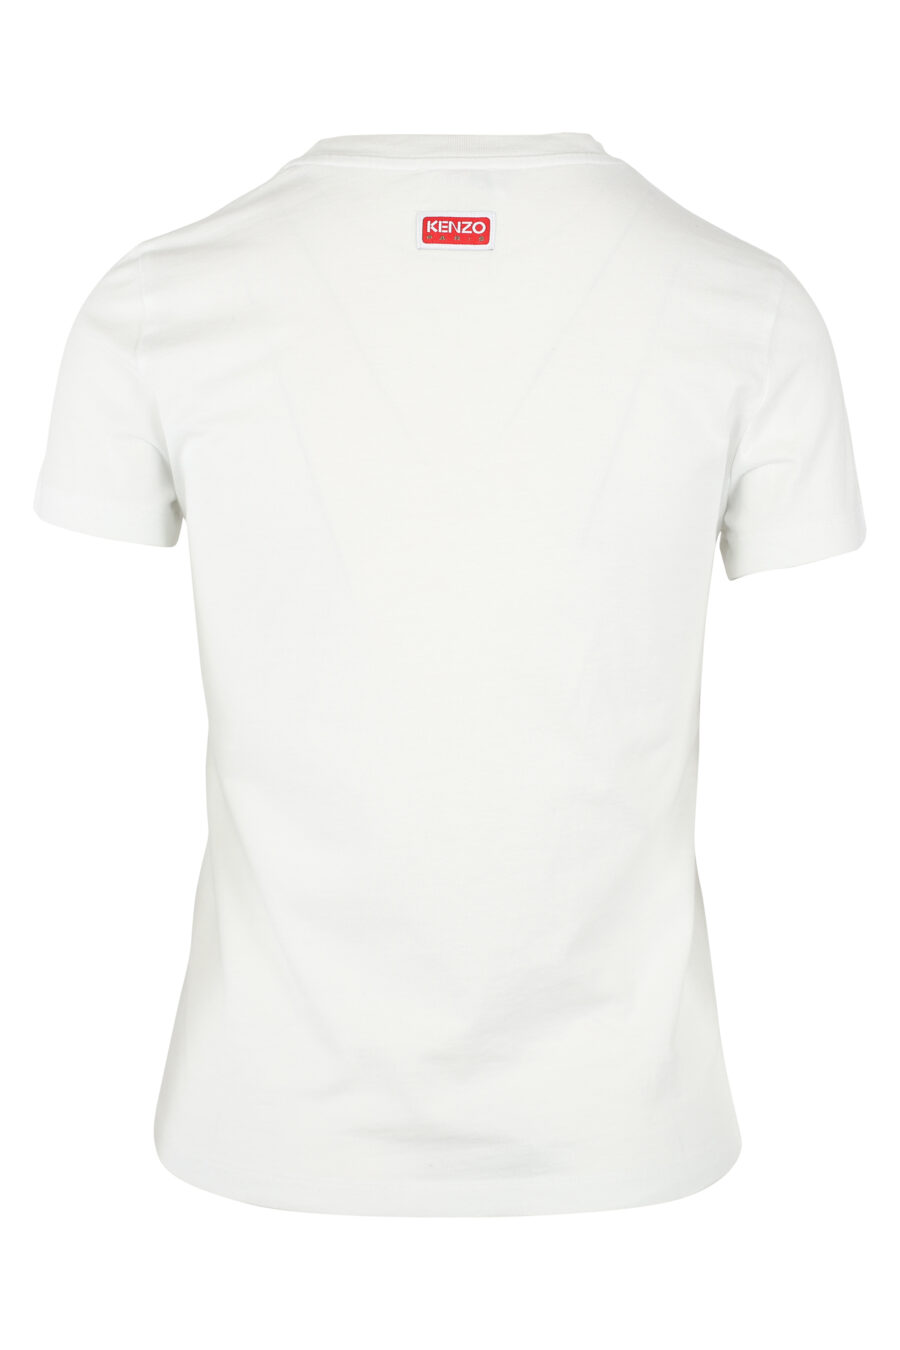 Weißes T-Shirt mit Tiger-Maxilogo - IMG 9531